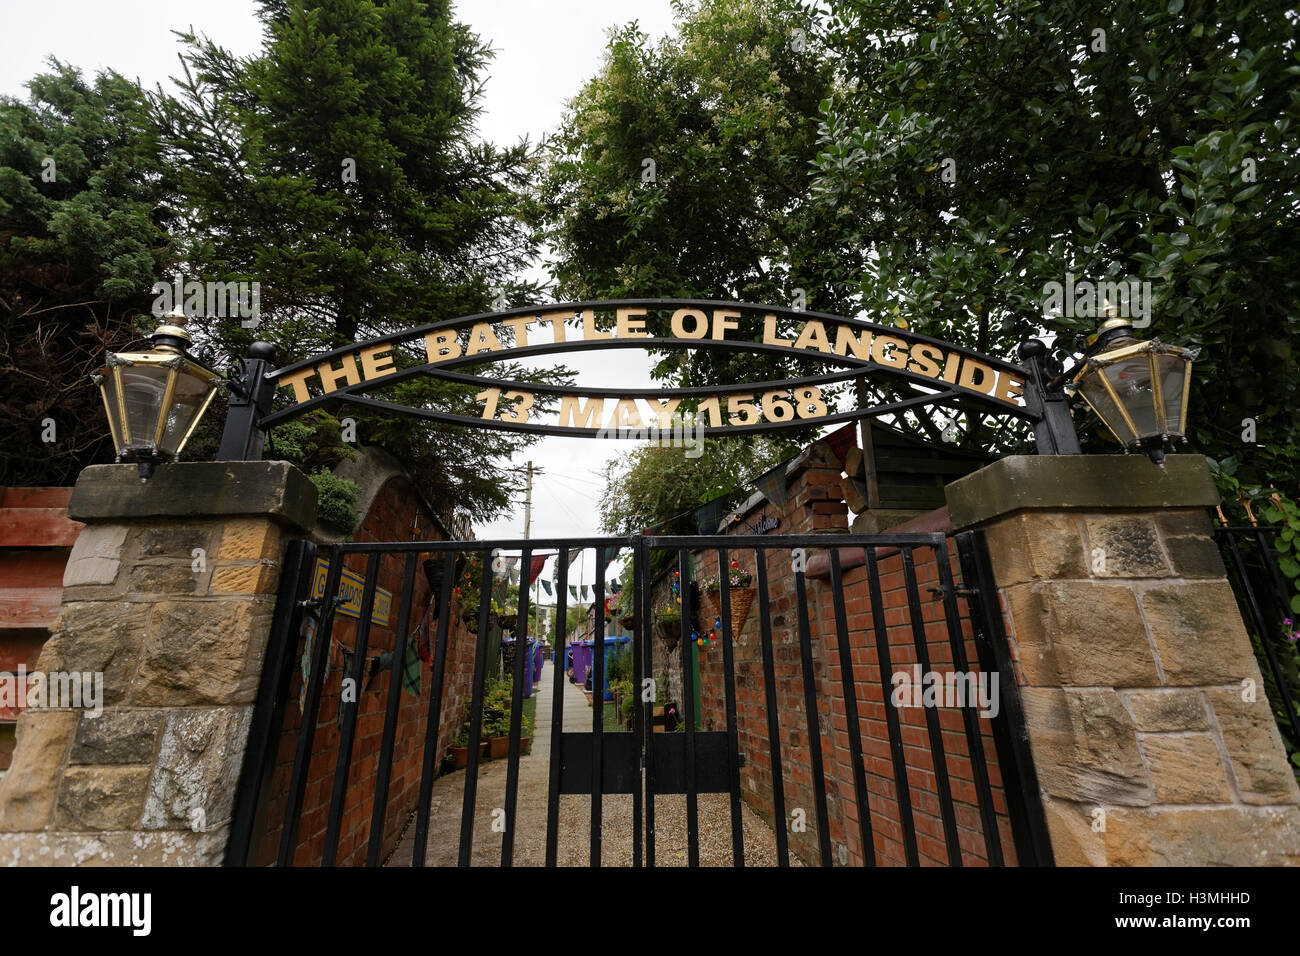 Battle of Langside commemorated on lane gates adjacent to the battlefield Stock Photo